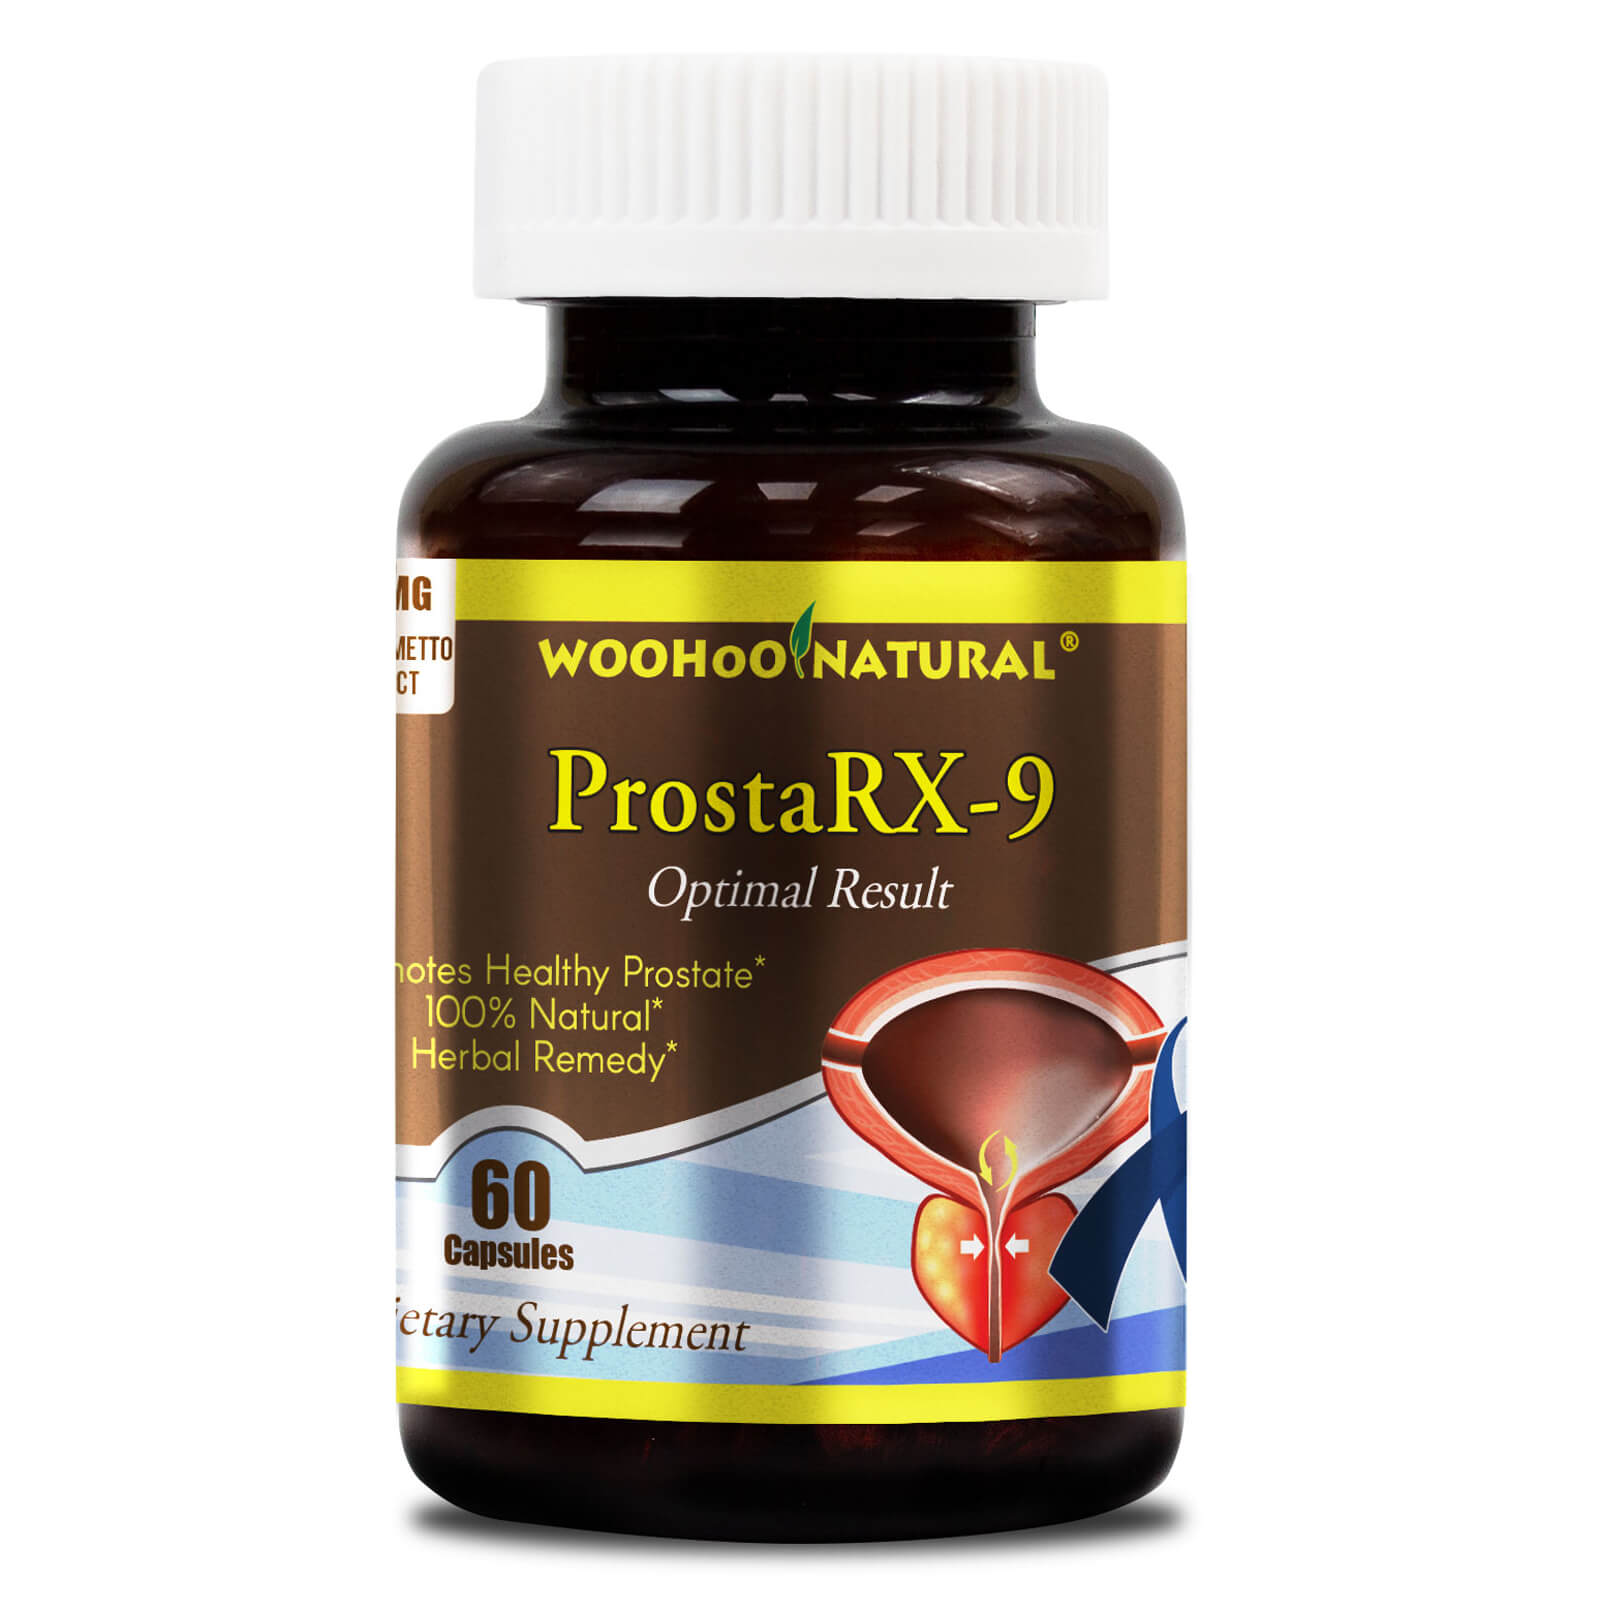 WooHoo Natural Prosta RX-9 Prostate Health Formula 60 Capsules - DailyVita